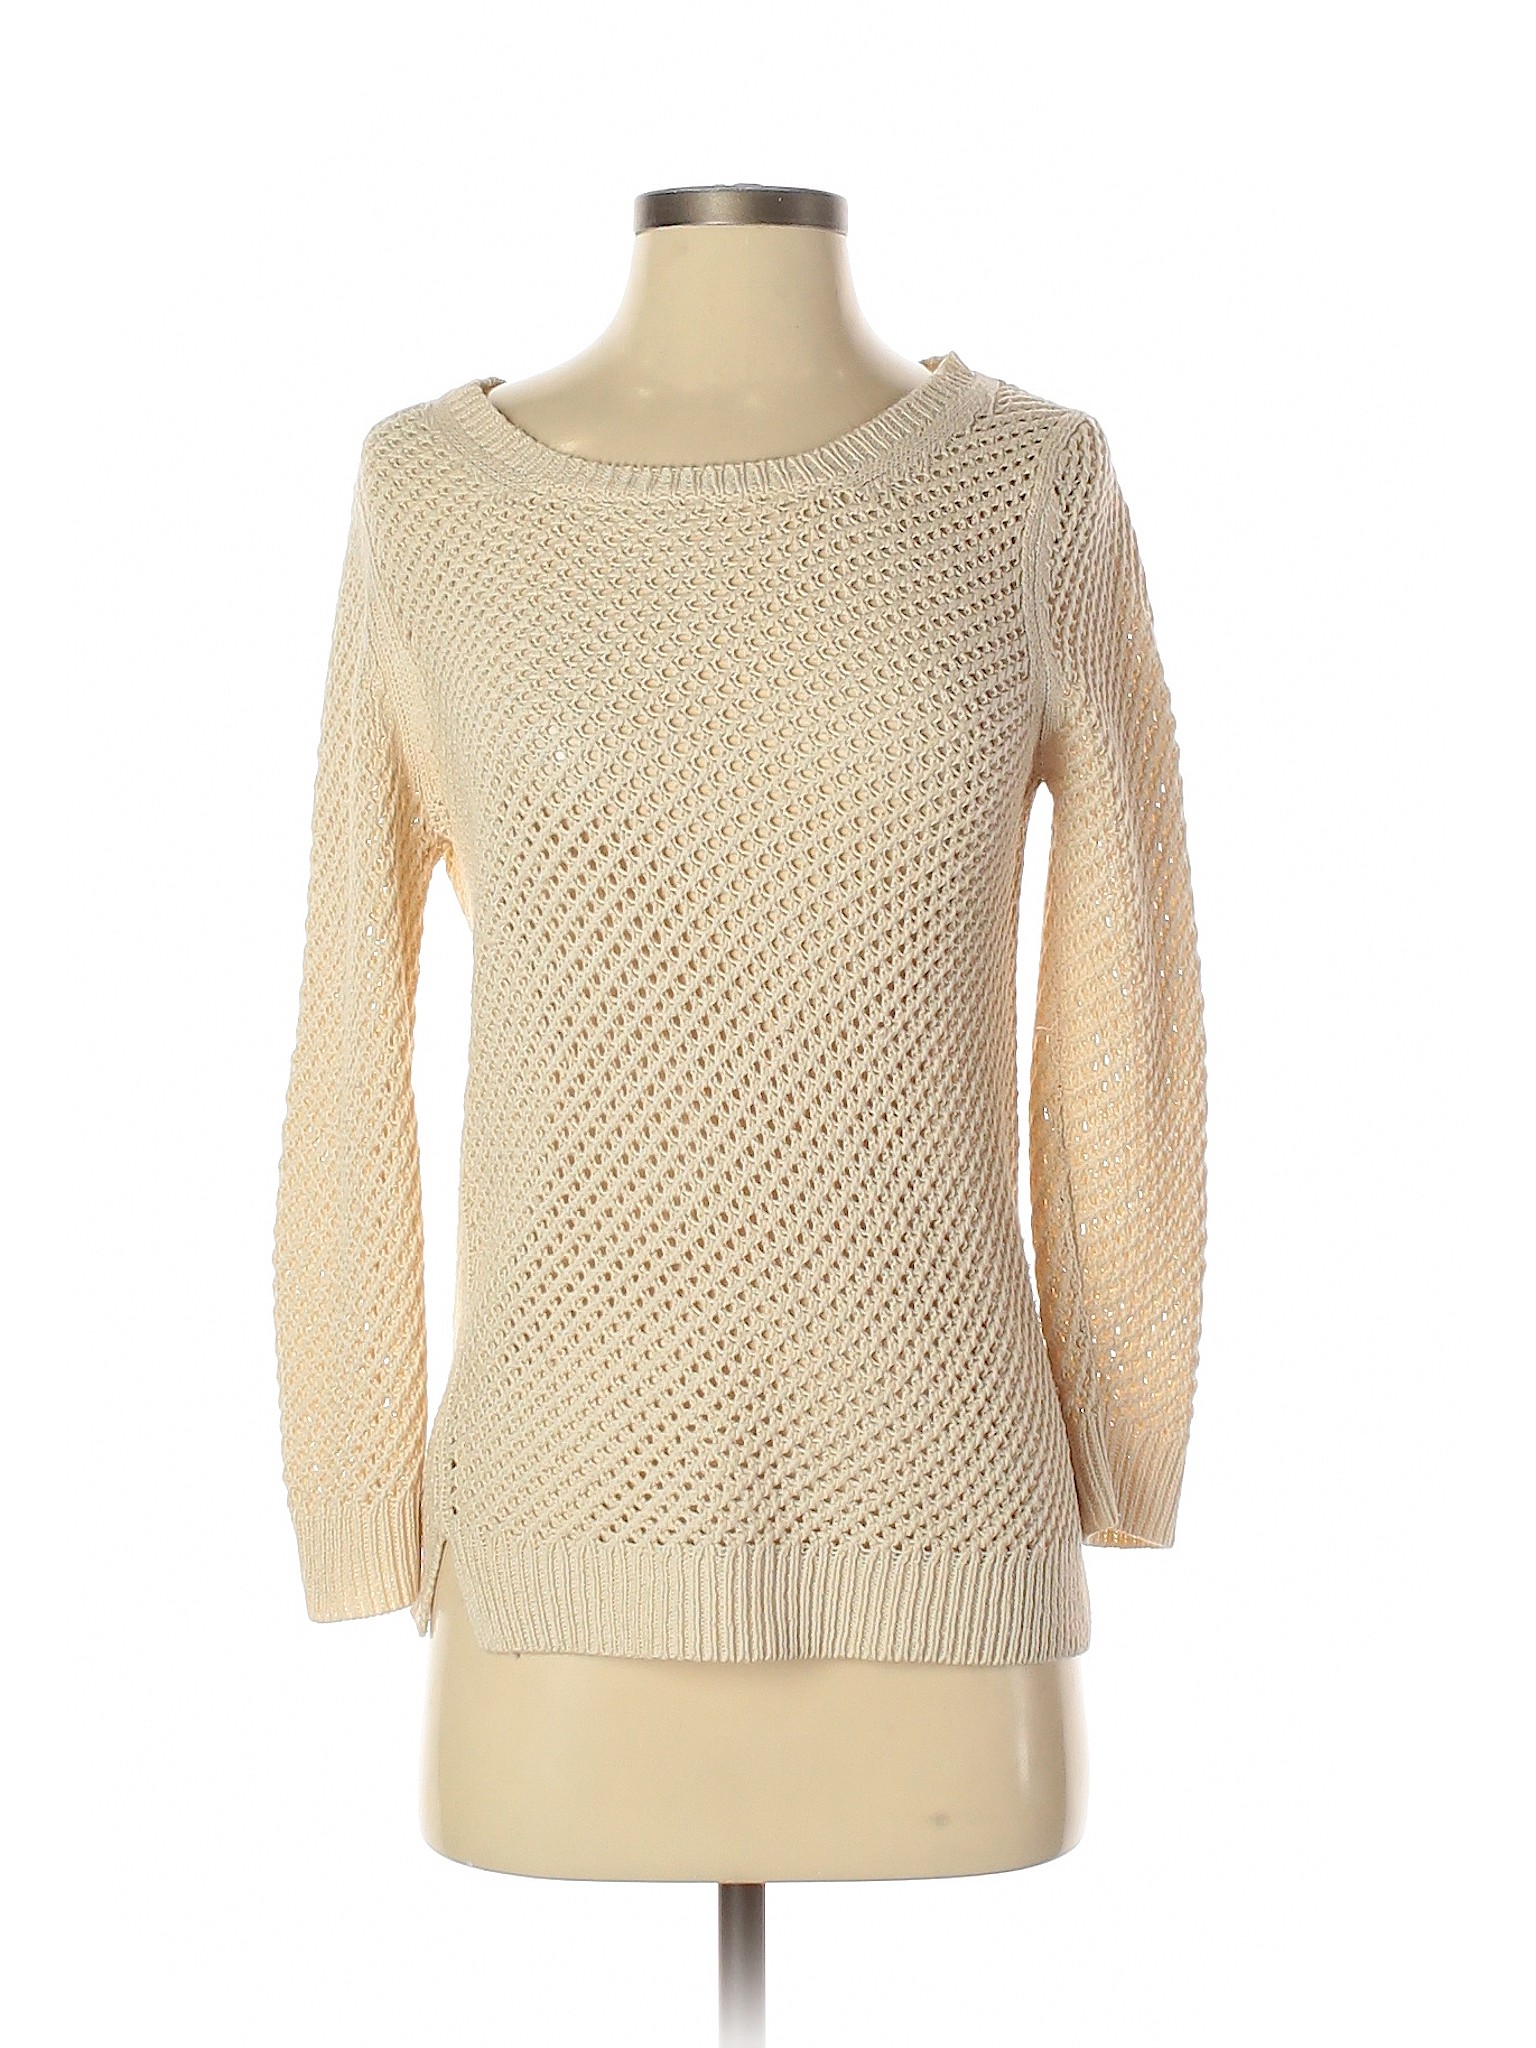 Ann Taylor Women Brown Pullover Sweater S | eBay